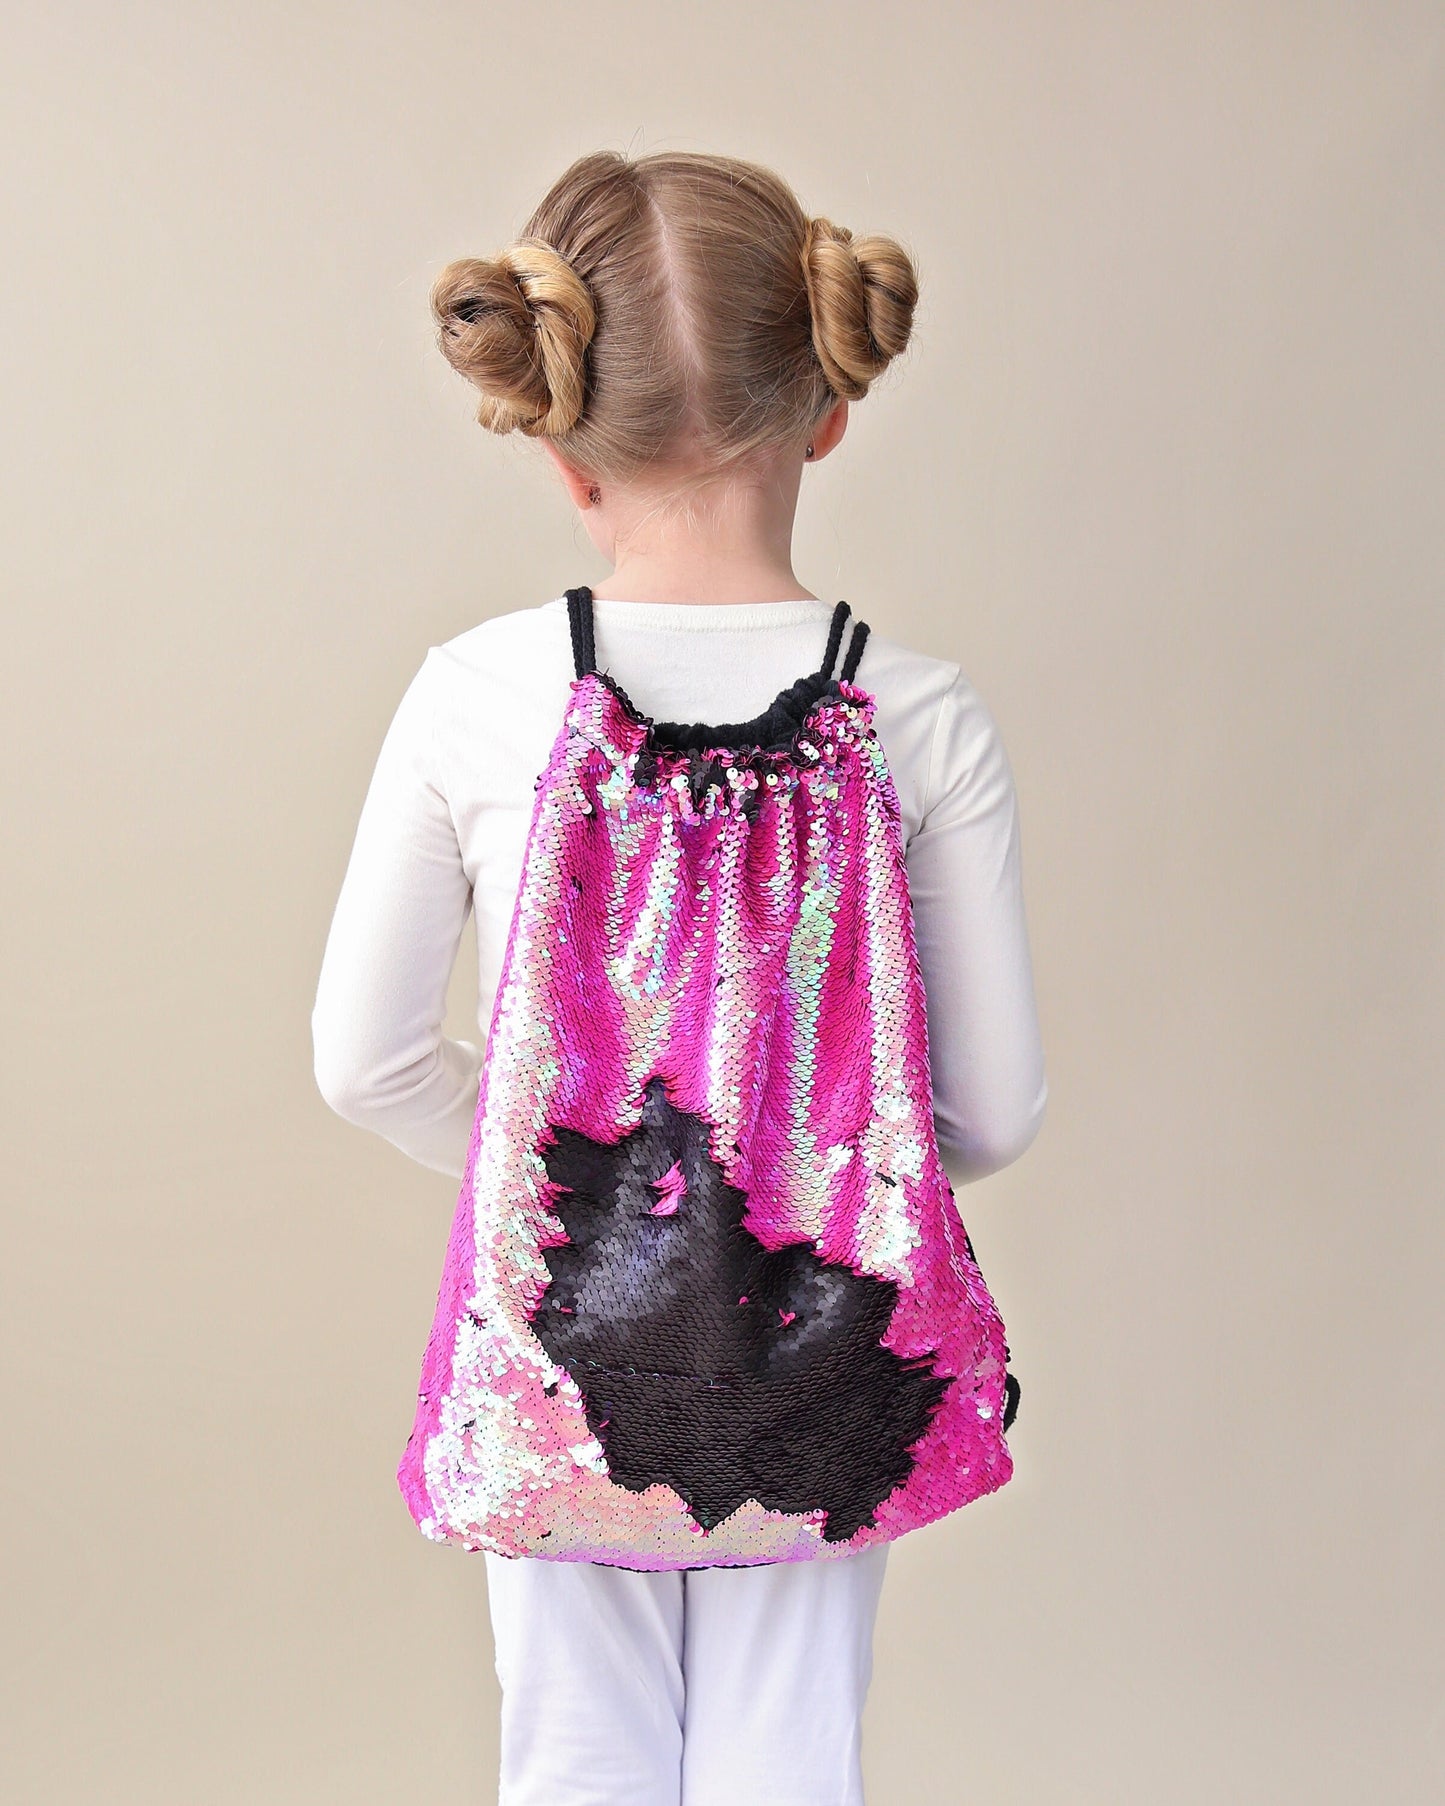 Hot Pink and Black Sequin Backpack - Sequin Backpack - Sequin Bag - Reversible Sequin Backpack - Drawstring Flip Sequin Backpack